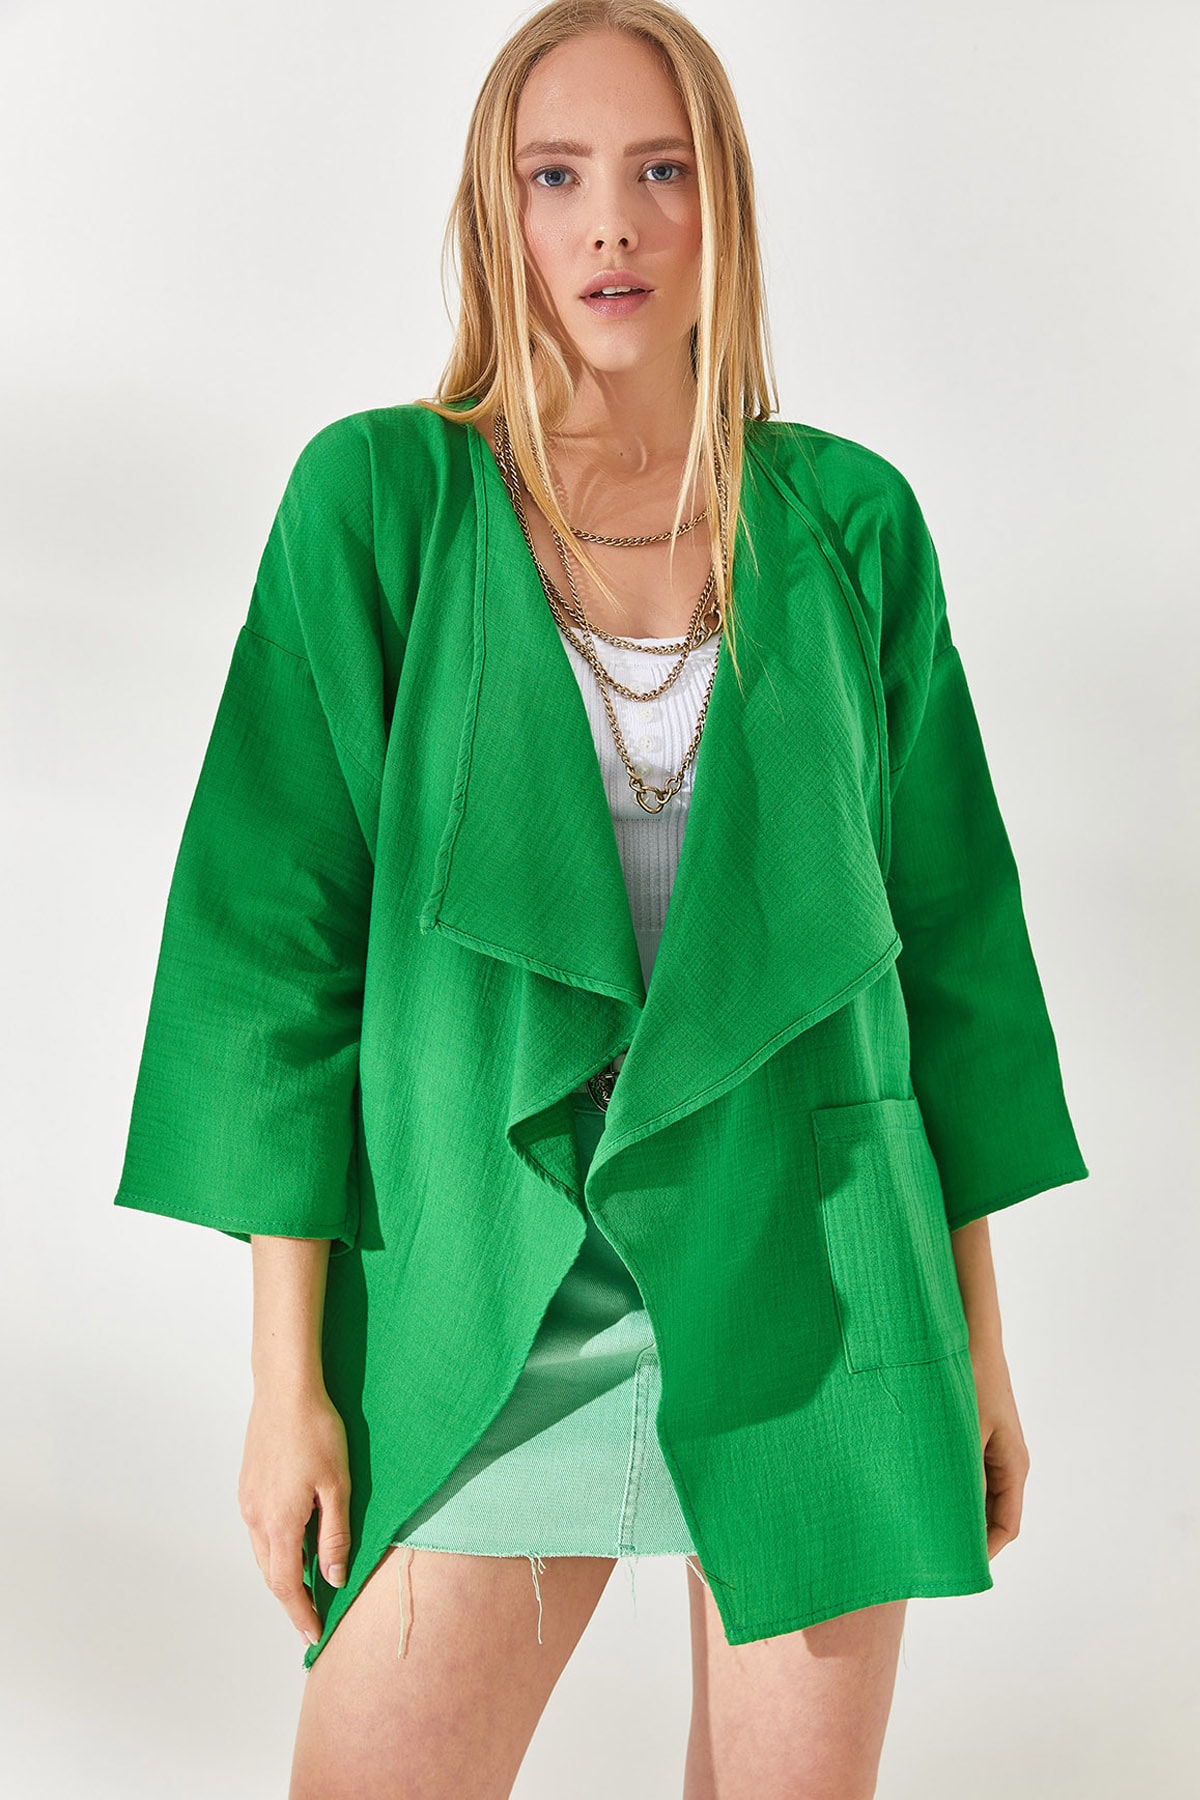 Olalook Women's Grass Green Shawl Collar Oversized Muslin Jacket With Pocket